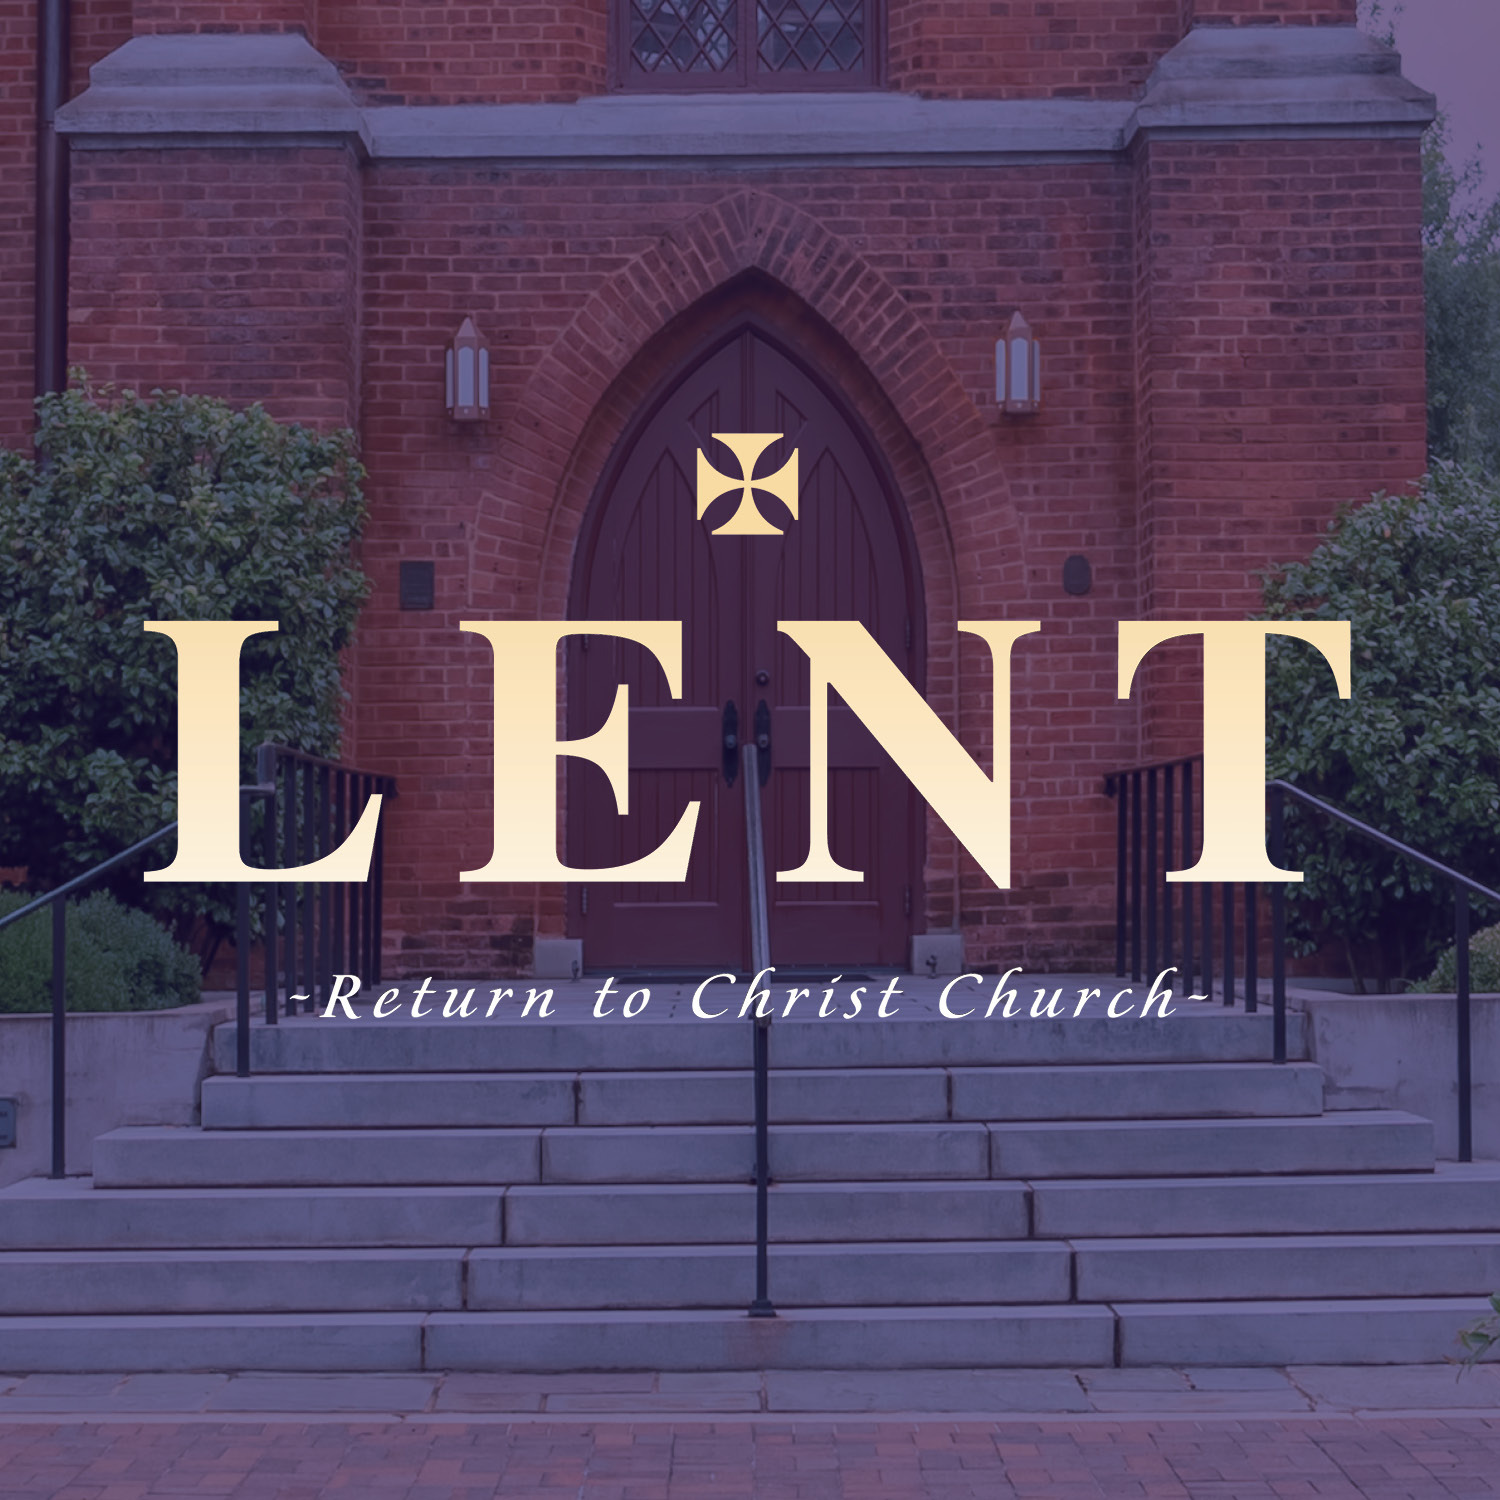 This Lenten Season, Return to Christ Church